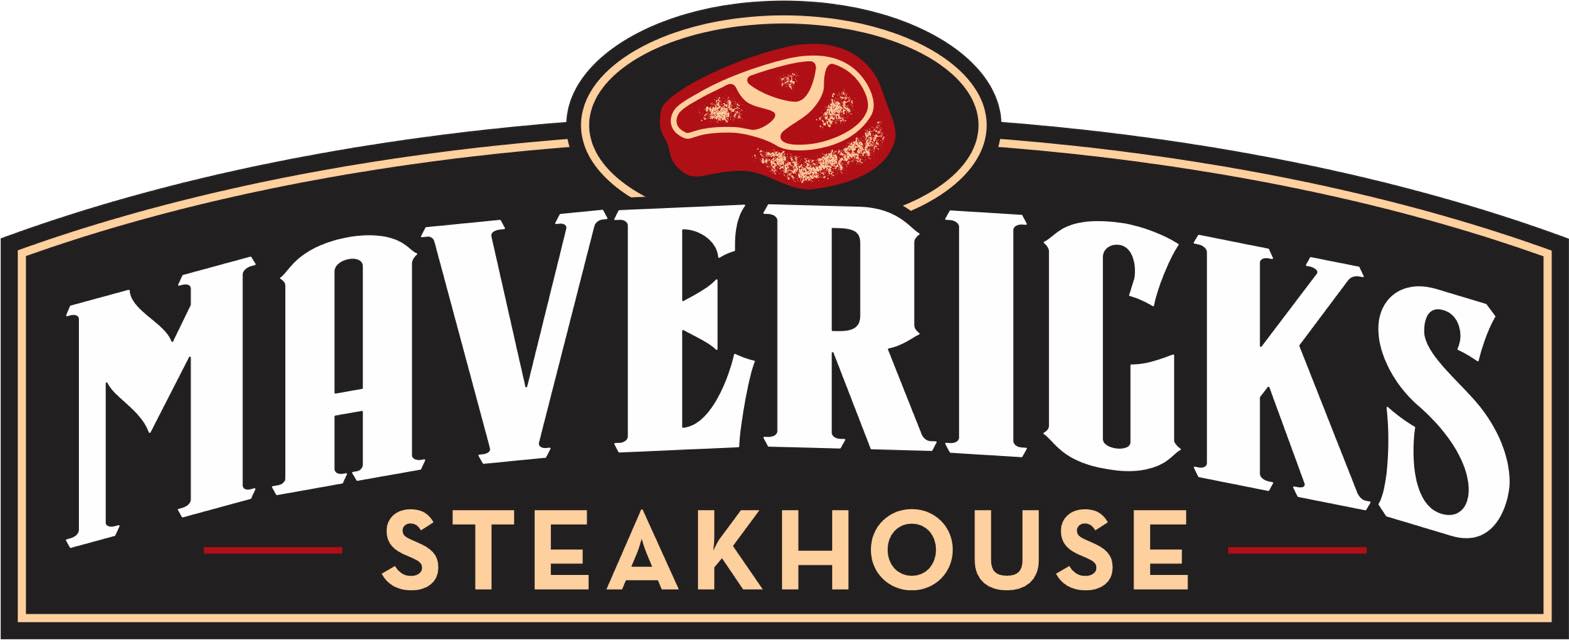 image of Maverick's Steakhouse logo